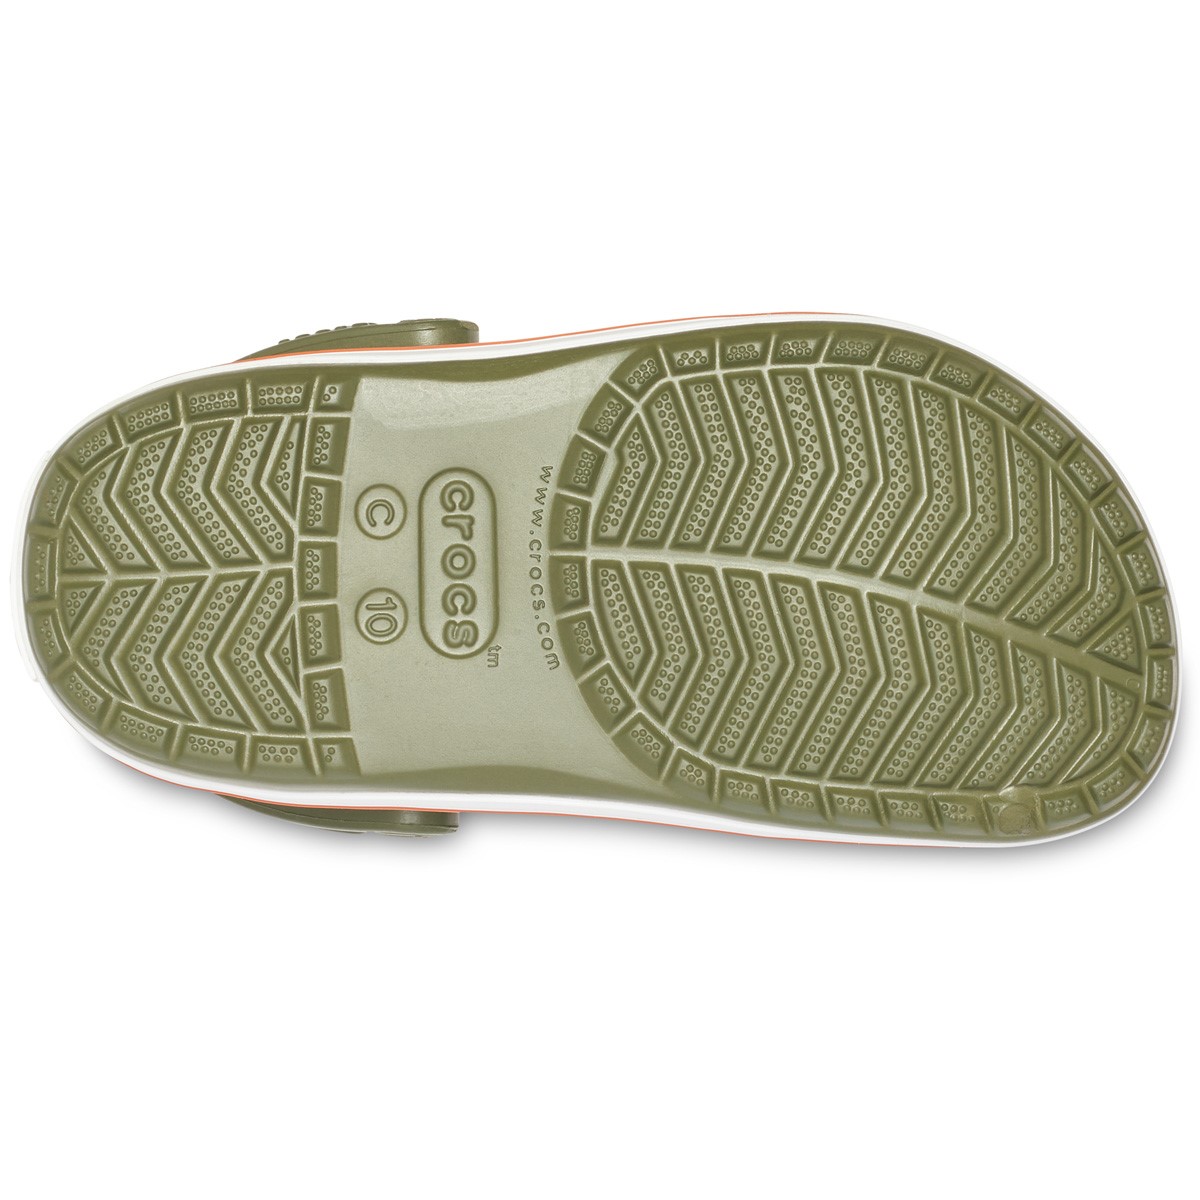 Crocs Sandalet 204537 Army Green/Burnt Sienna